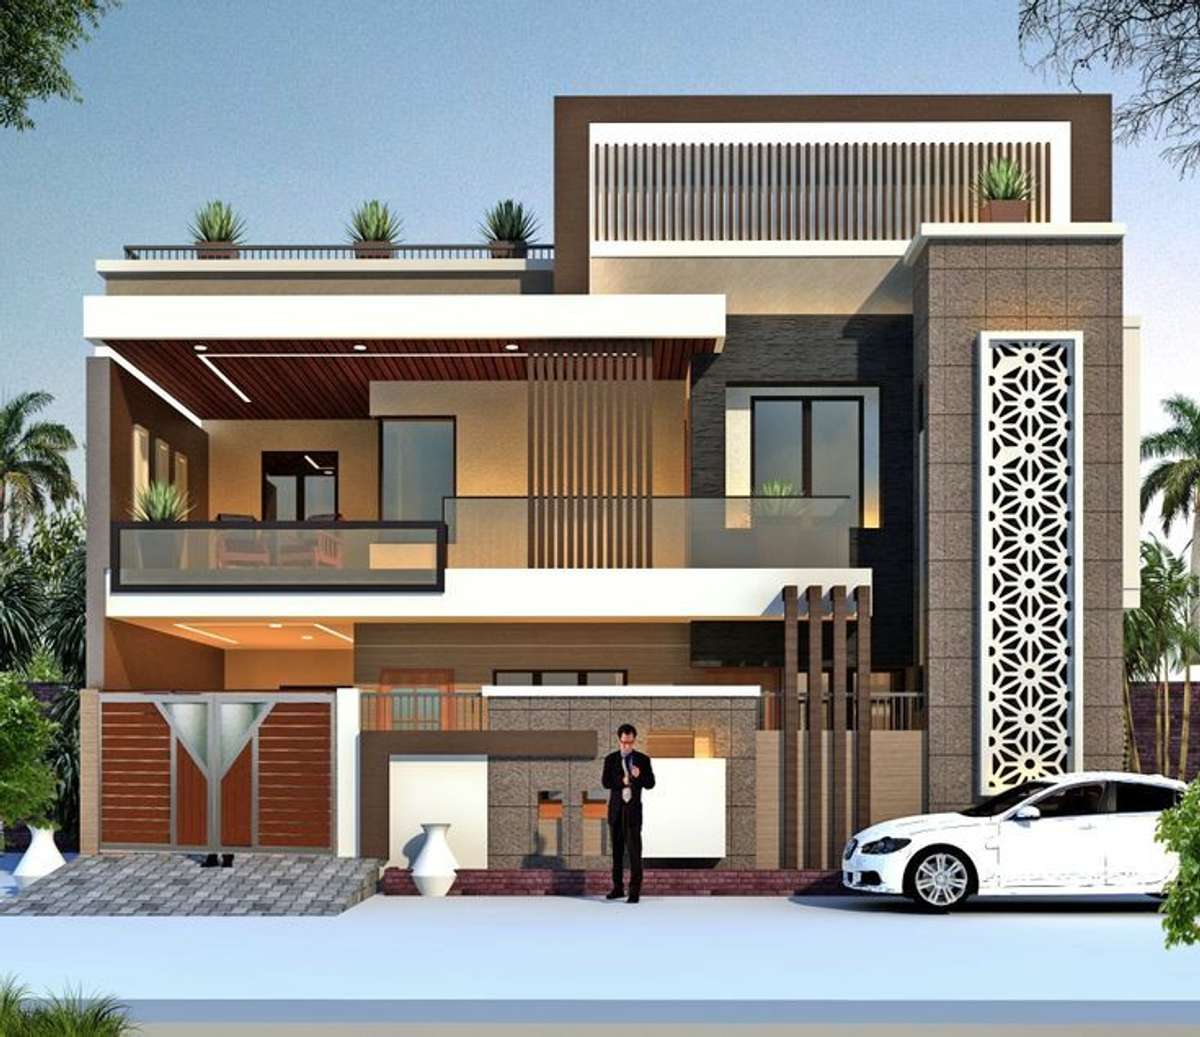 Designs by Civil Engineer Er prahlad Saini, Jaipur | Kolo